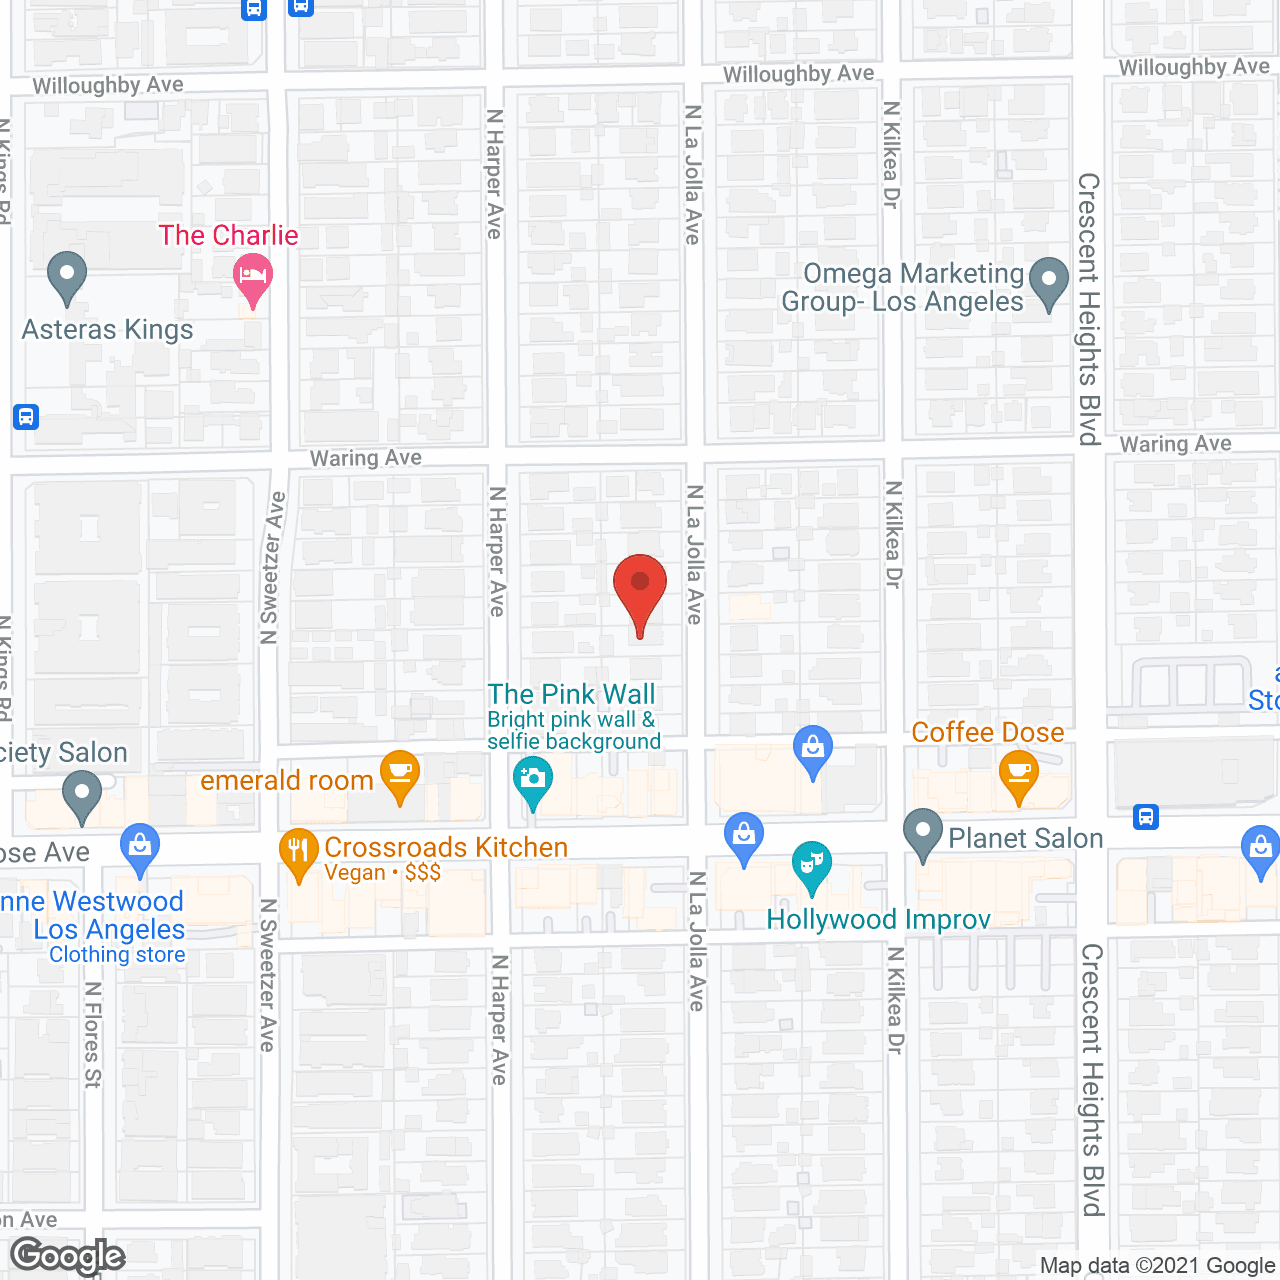 La Jolla Villa in google map